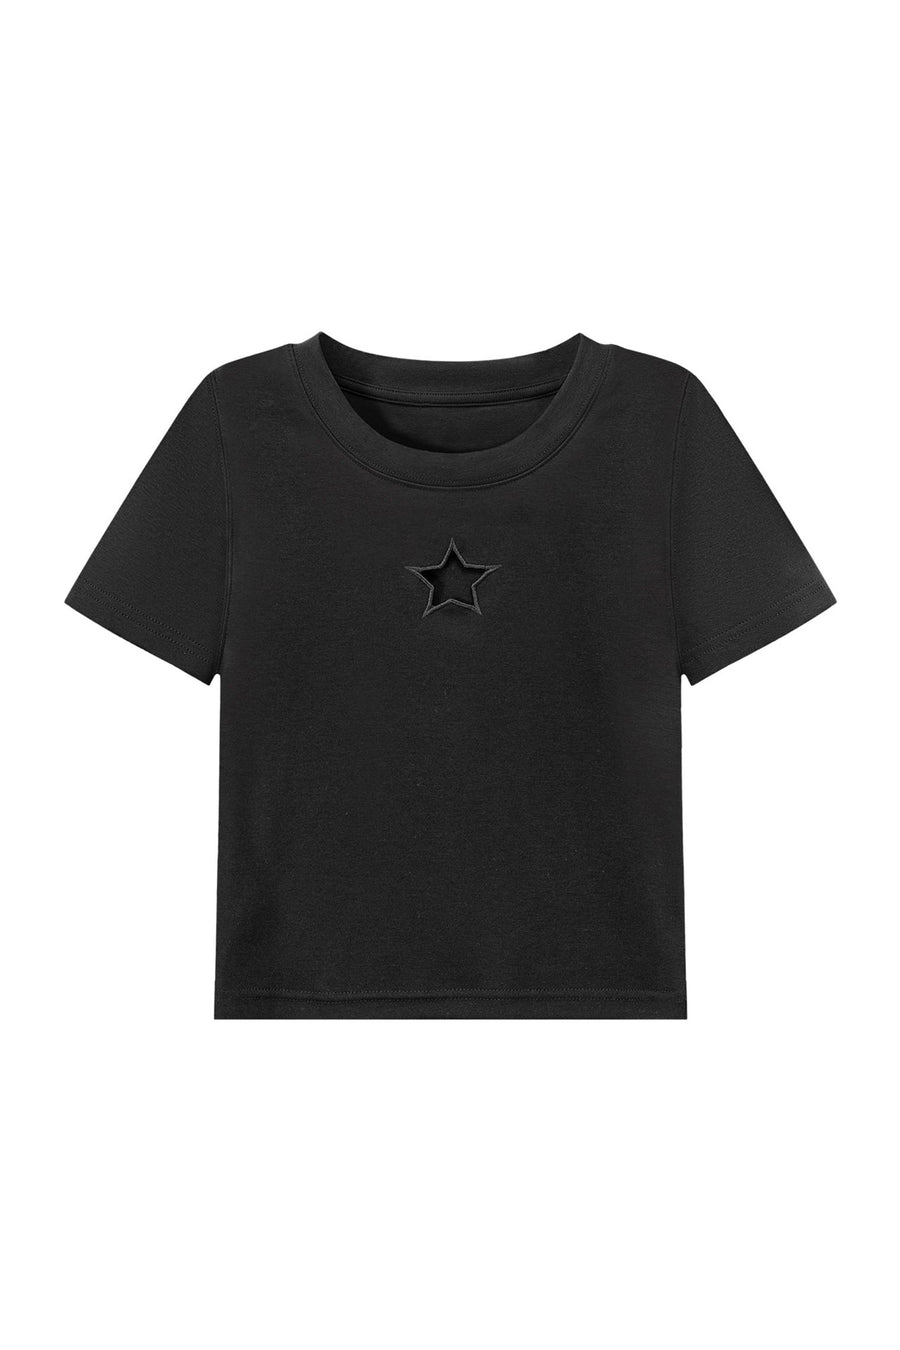 CHUU Basic Star Cut Out Short Sleeve Cropped T-Shirt